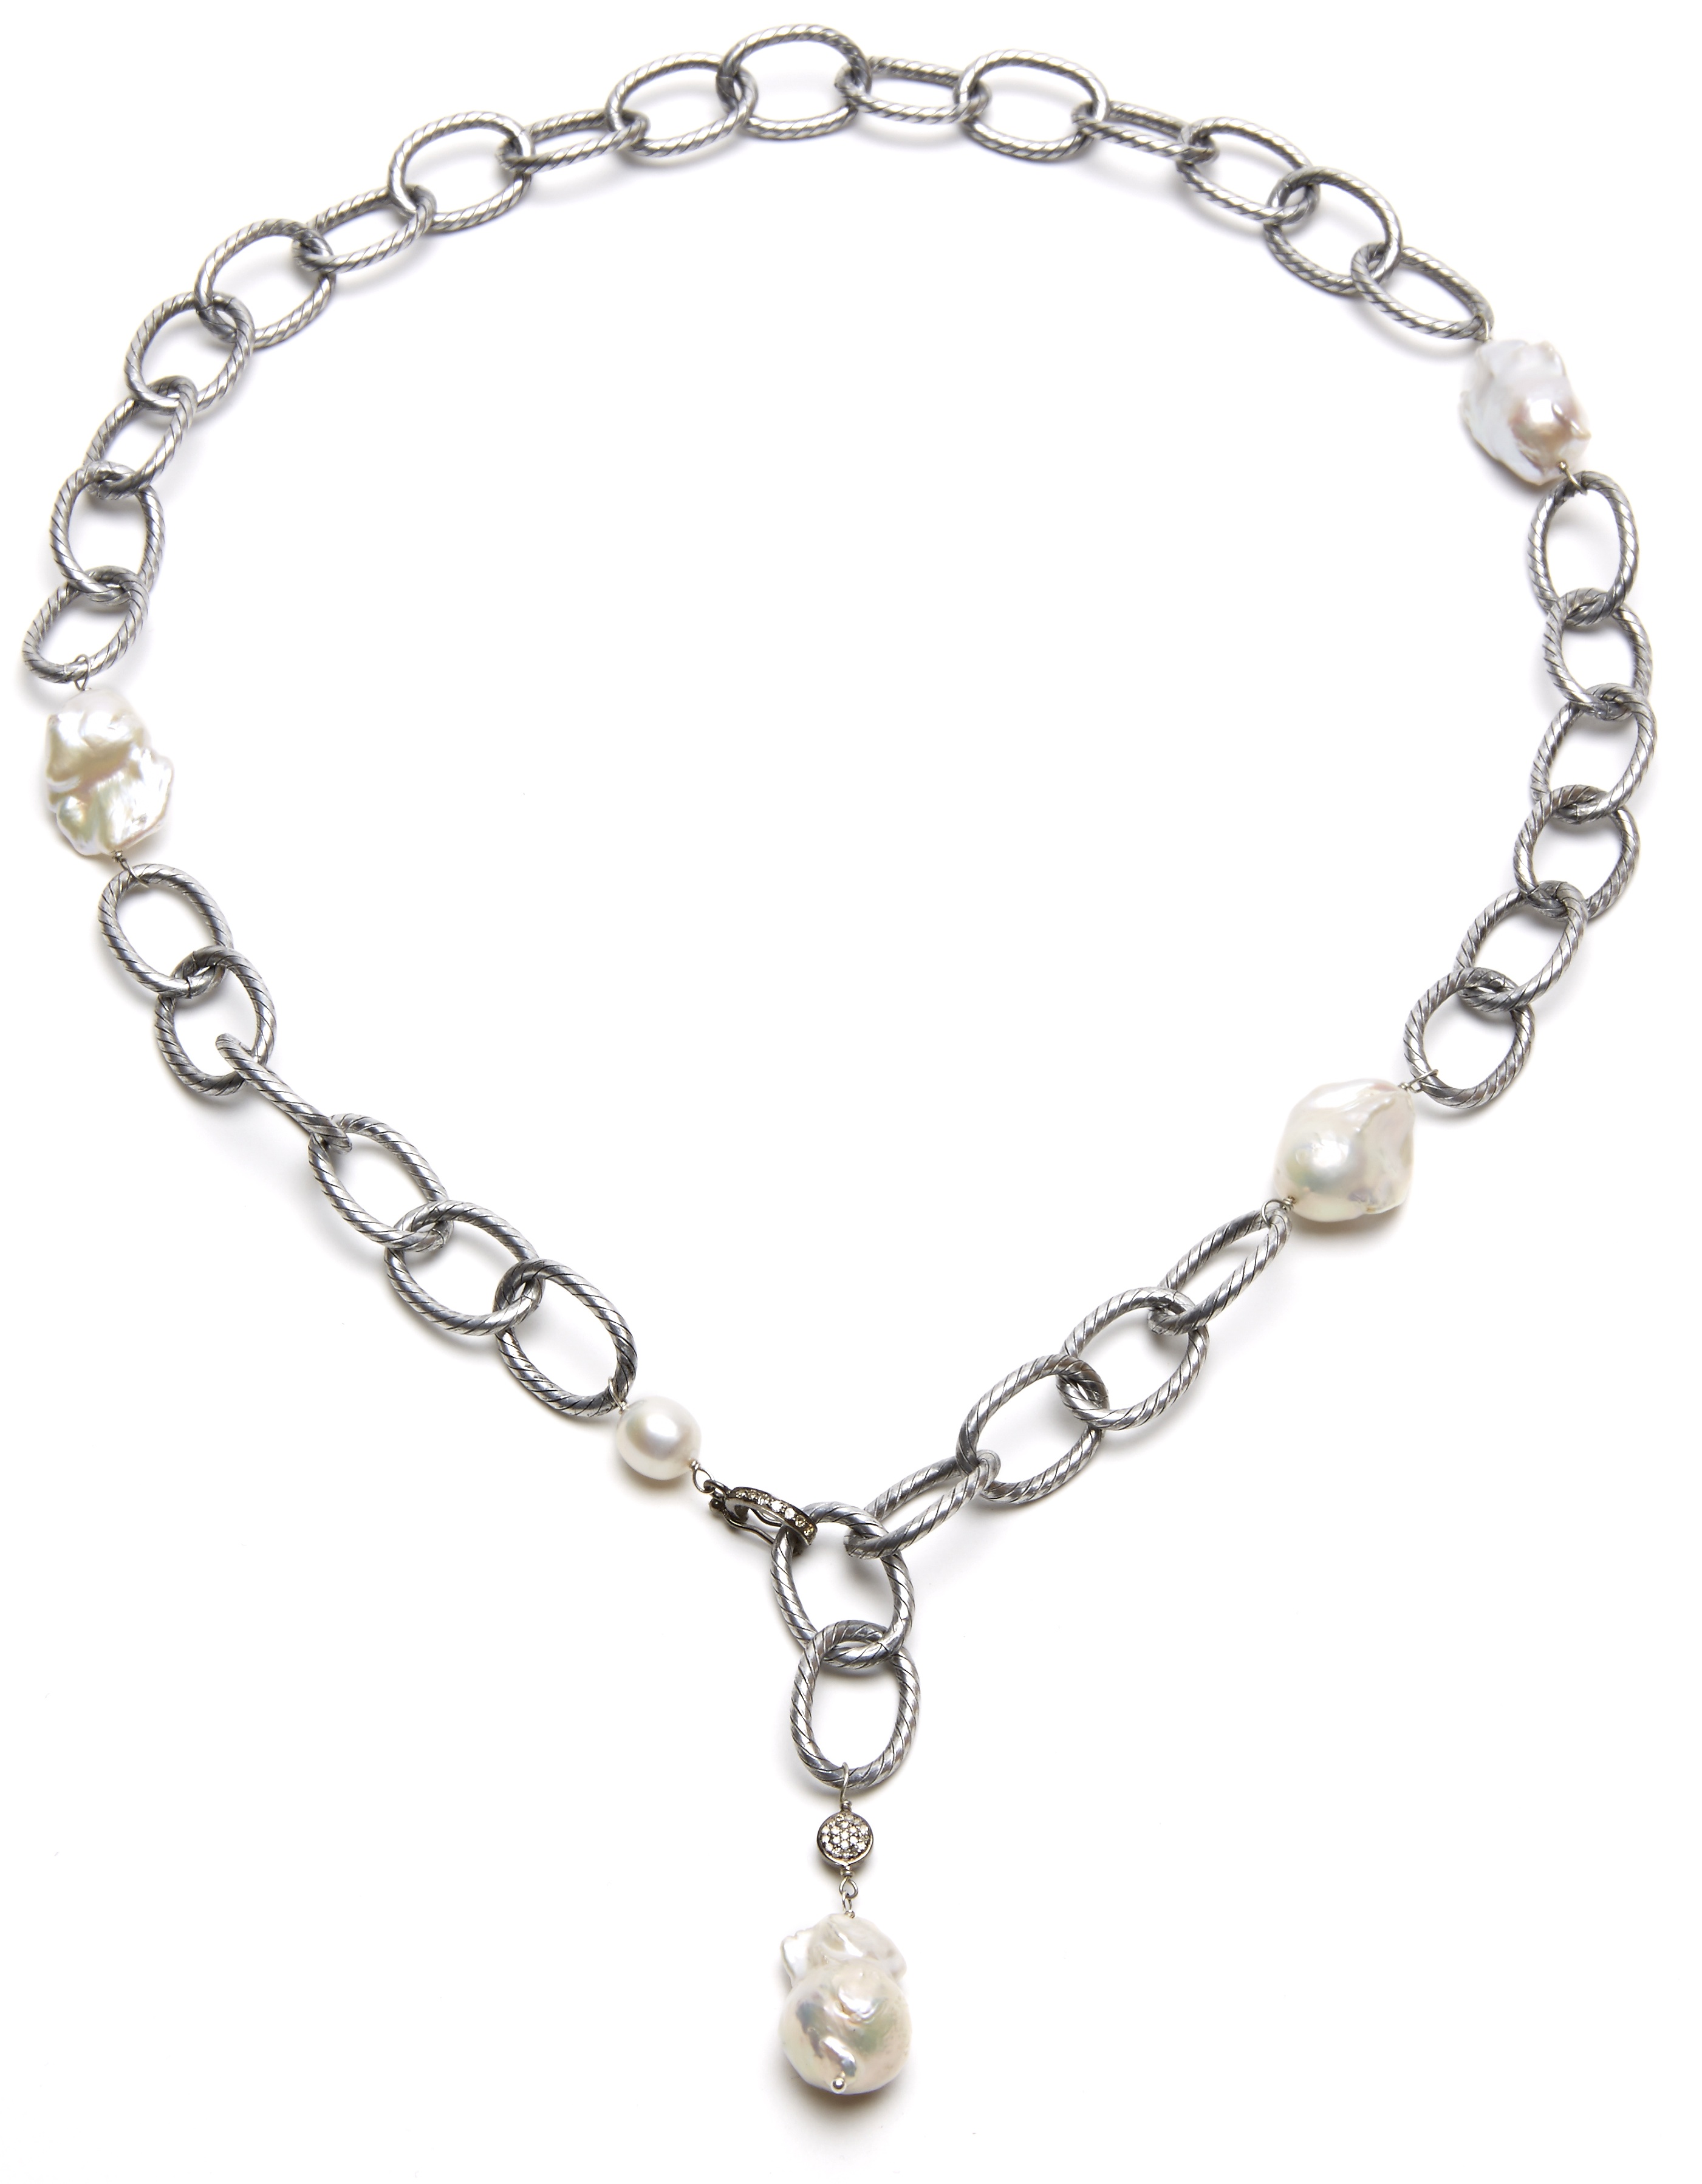 Lisa Mackey: Aluminum chain, diamonds, Baroque pearls